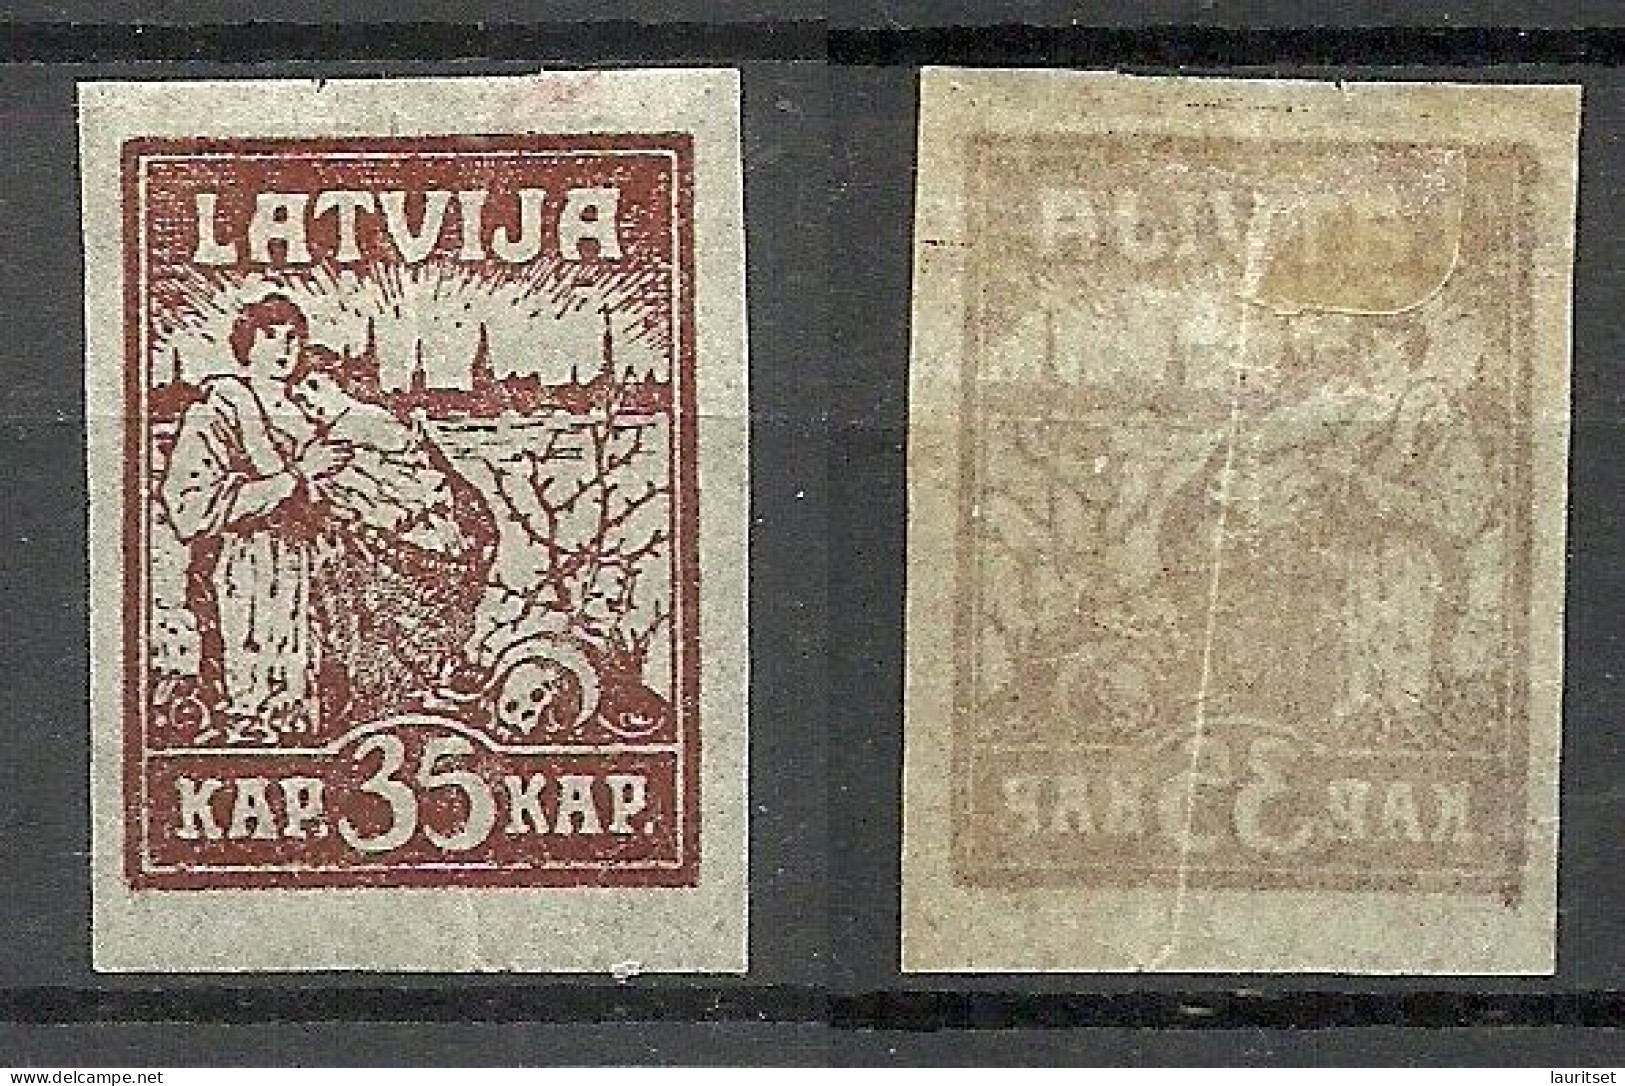 LETTLAND Latvia 1919 Michel 27 Y Zigarettenpapier Pelure Paper * NB! Light Vertical Fold Mark! - Letland